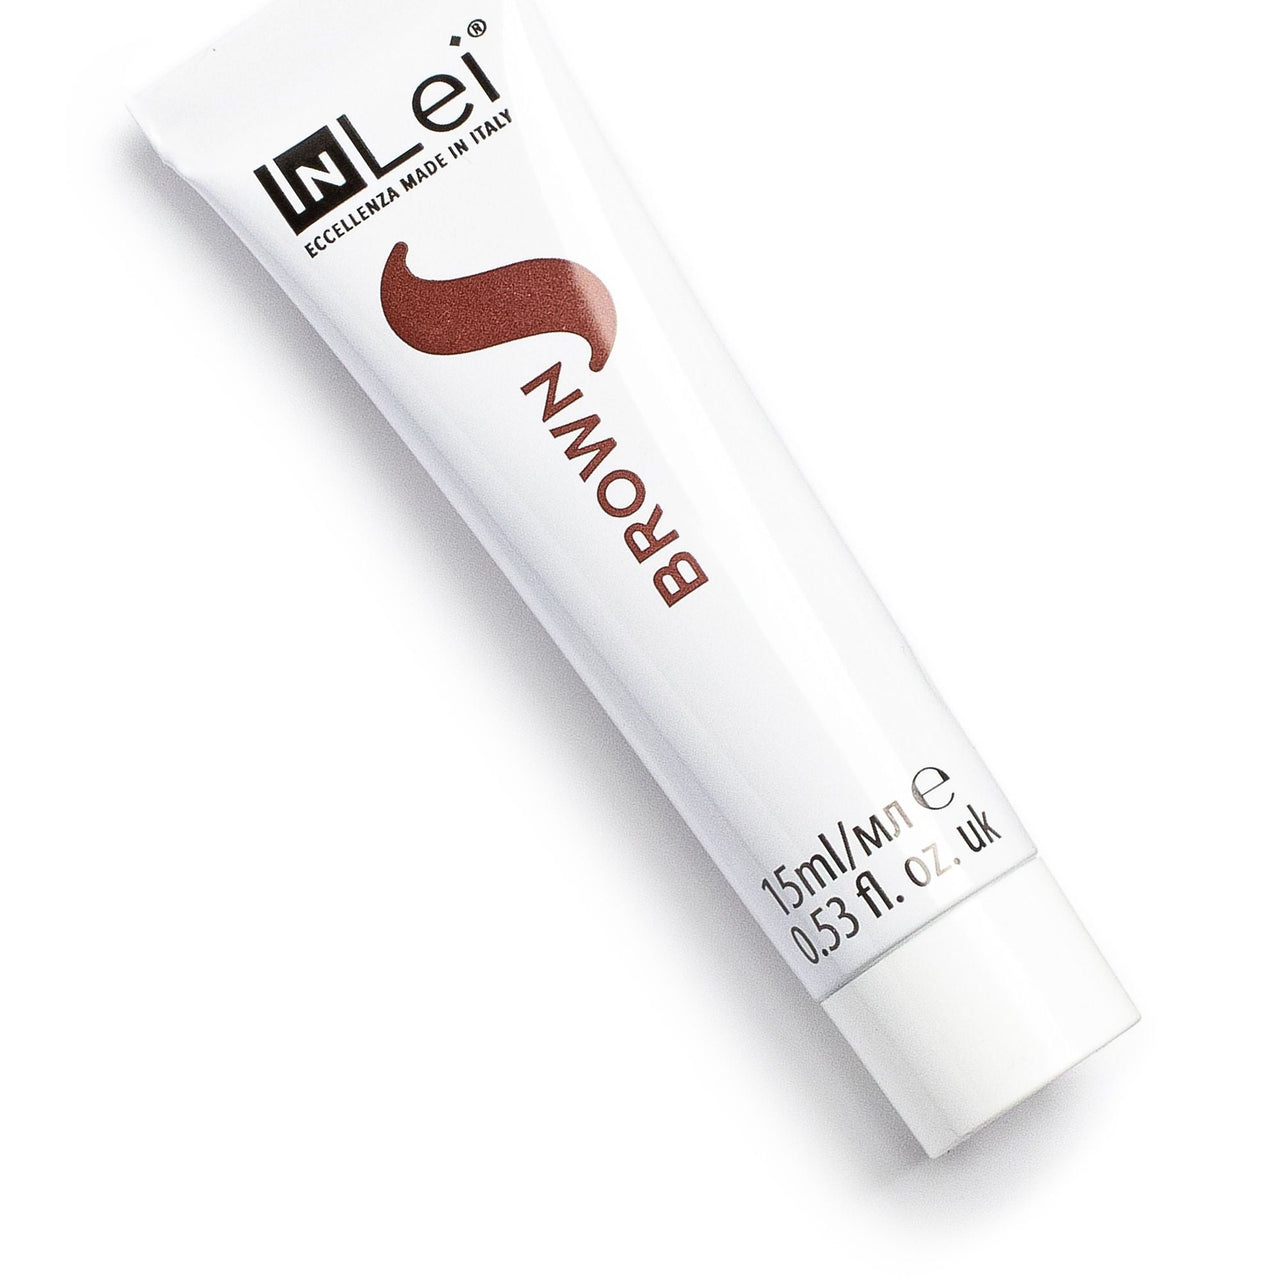 InLei® | Lash & Brow Tint | Brown - inlei.com